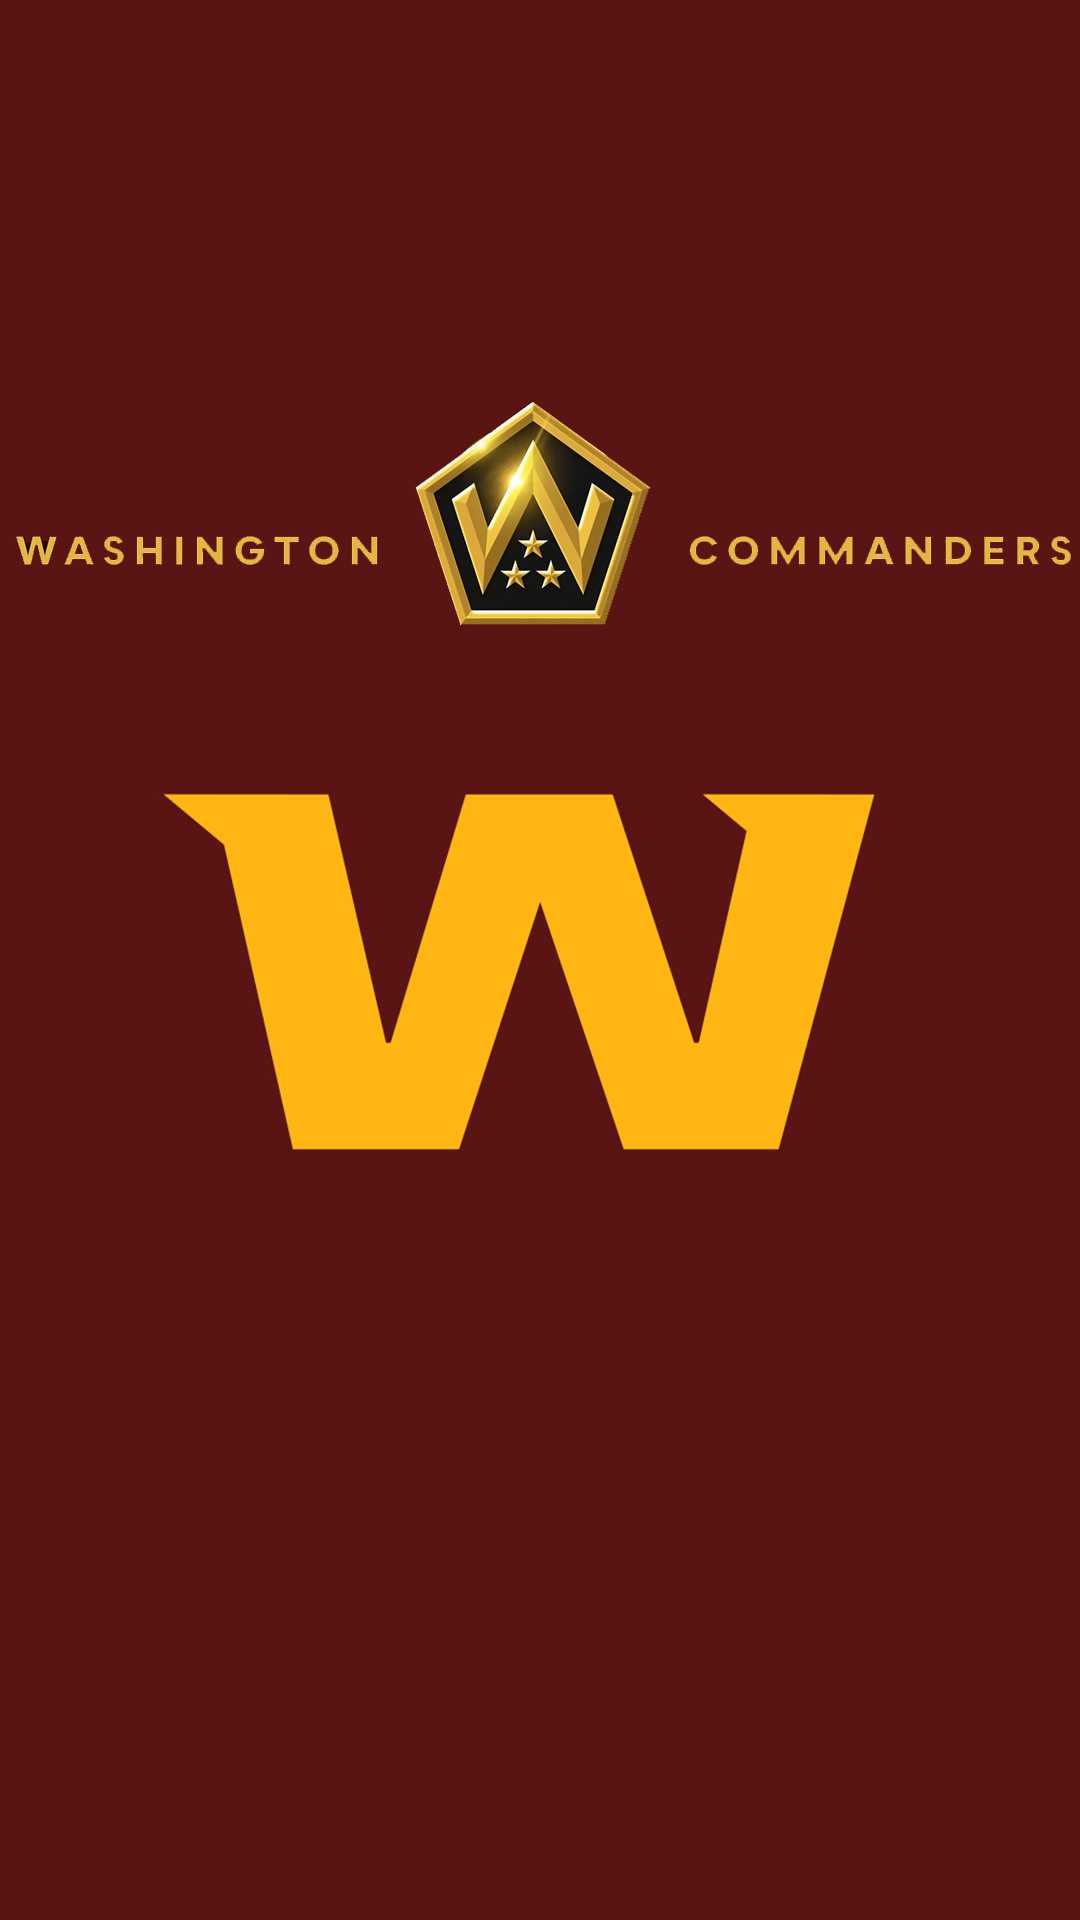 Washington Commanders Wallpaper  iXpap